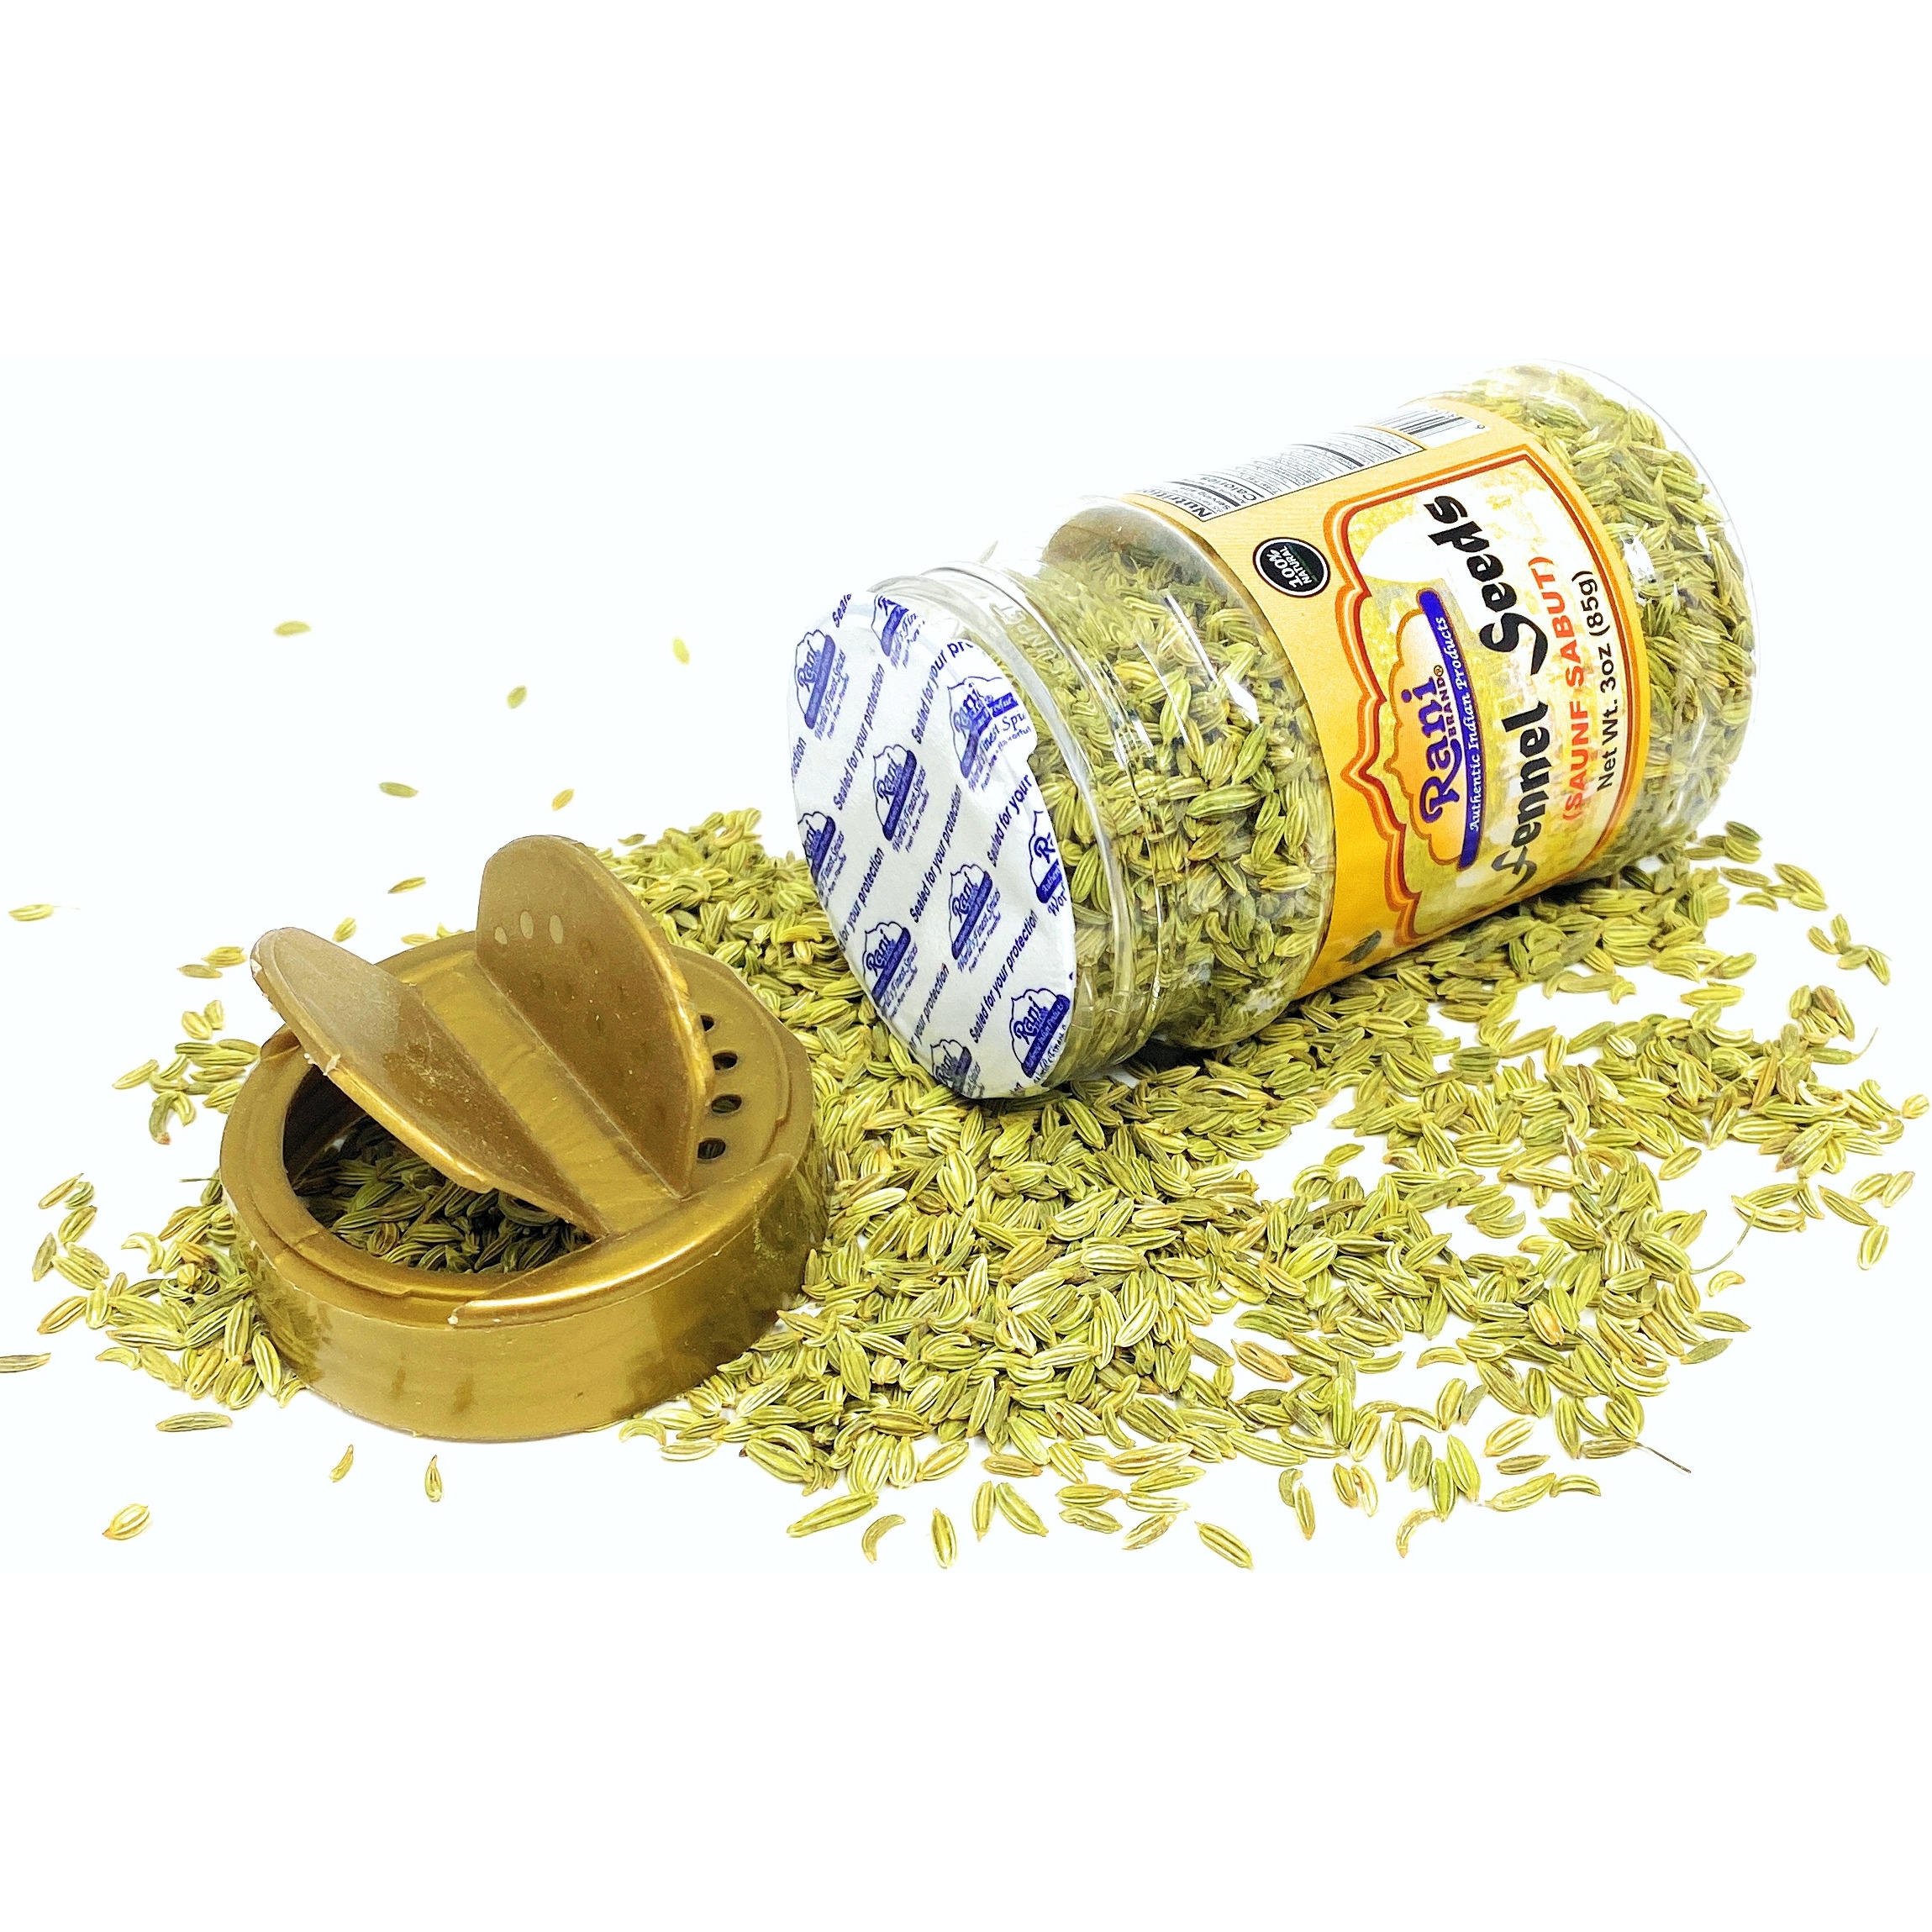 Rani Fennel Seeds (Saunf Sabut) Whole Spice 2.75oz (78g) All Natural ~ Gluten Friendly | NON-GMO | Vegan | Indian Origin